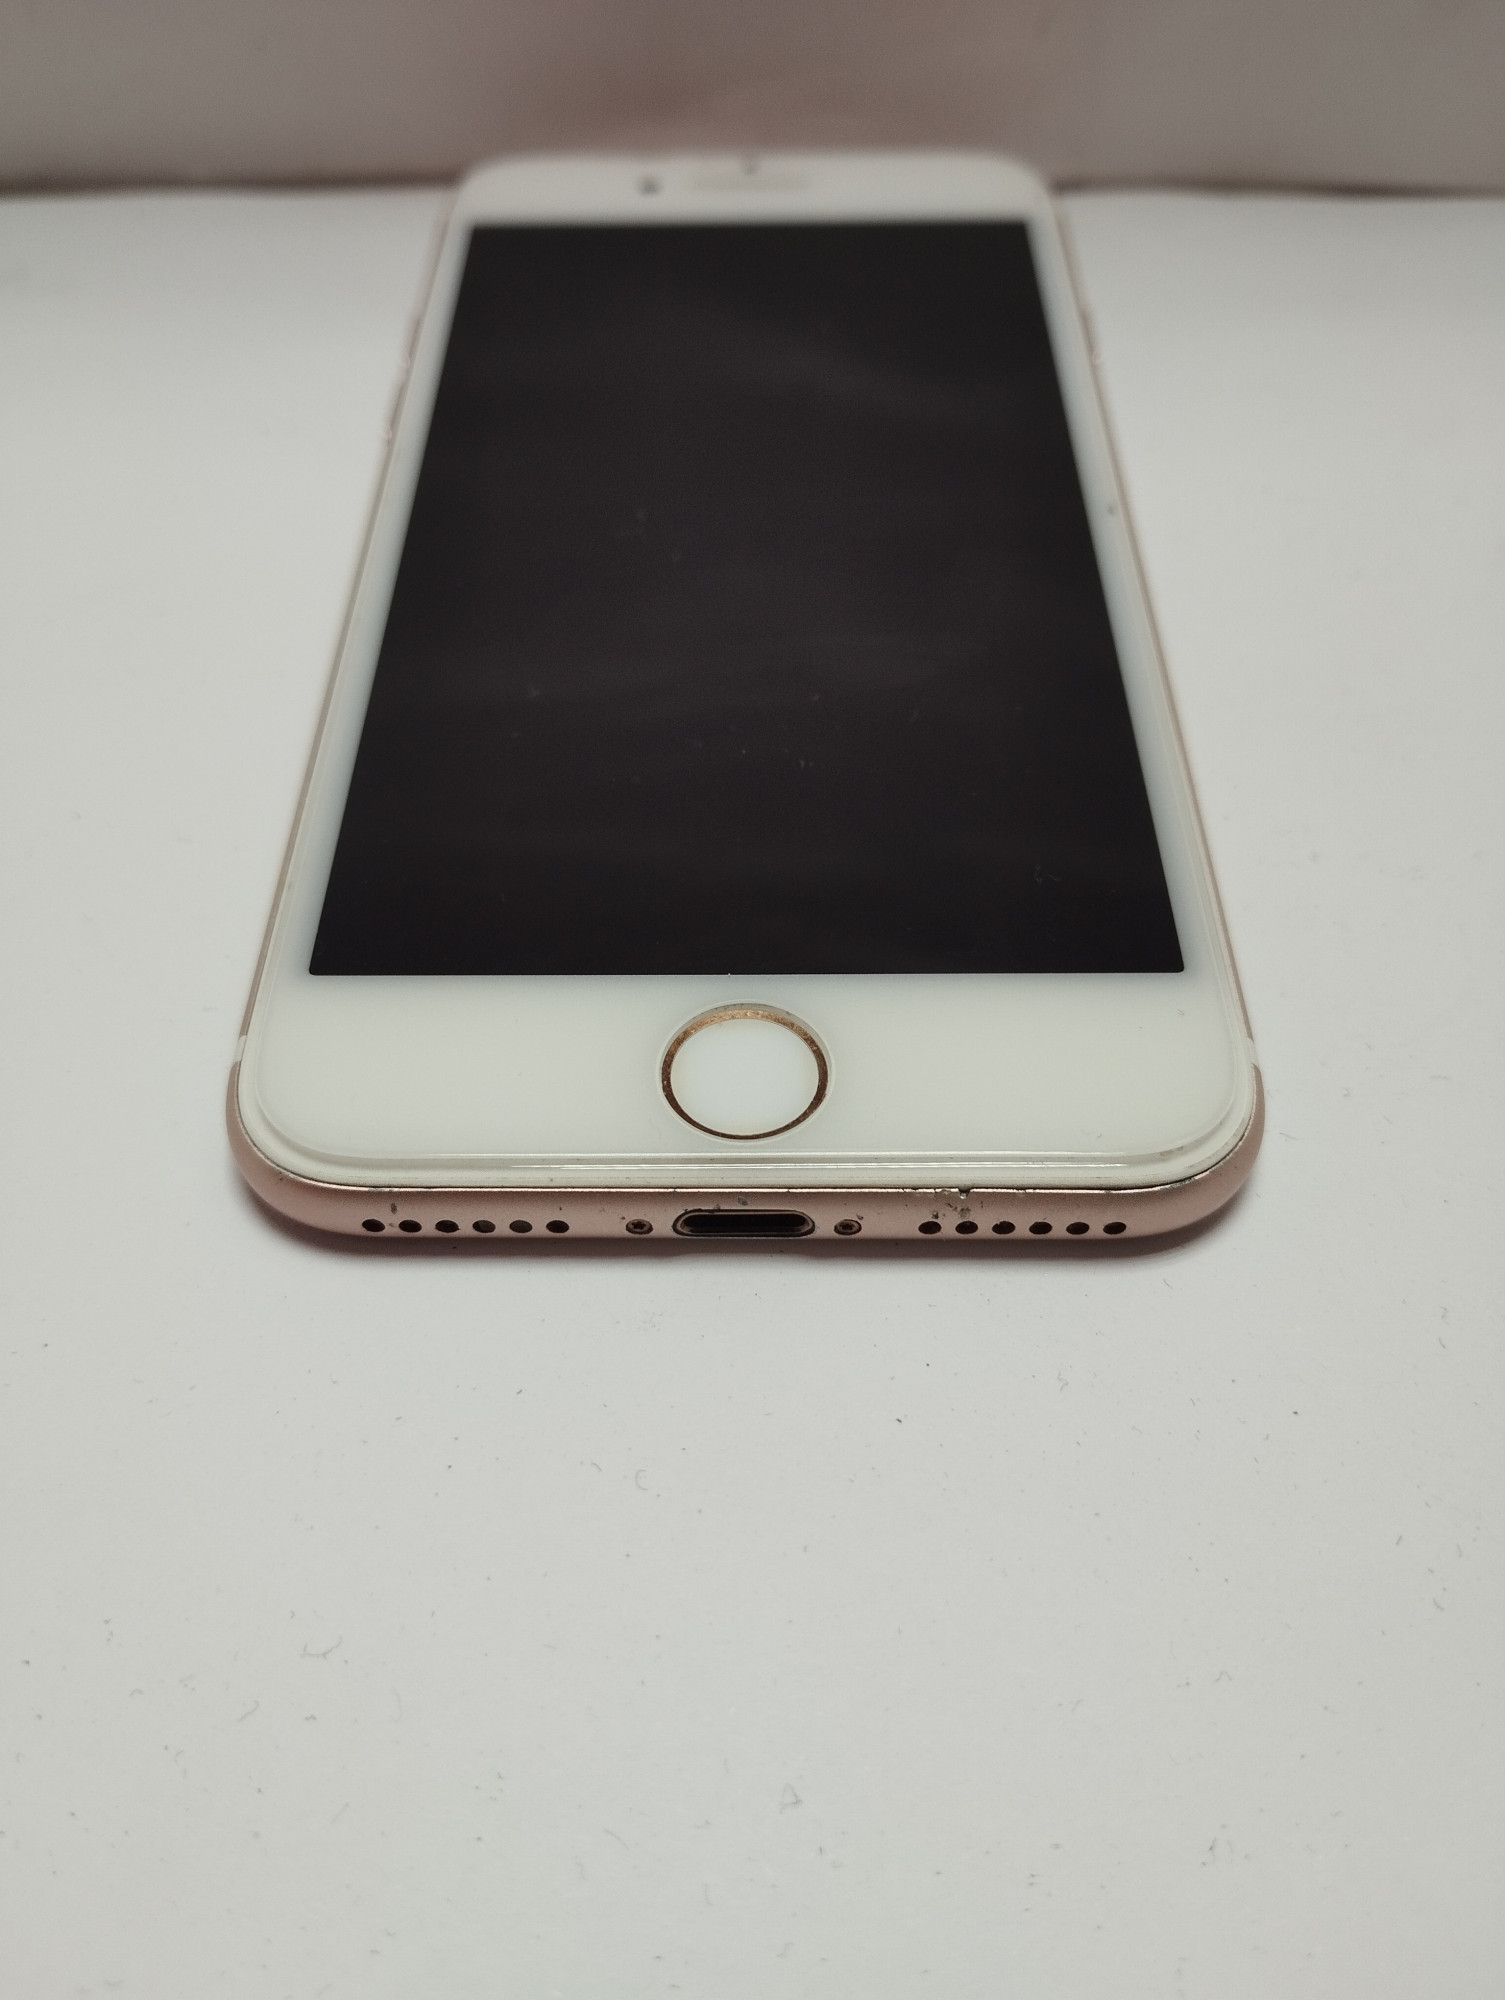 Apple iPhone 7 32Gb Rose Gold (MN912) 3